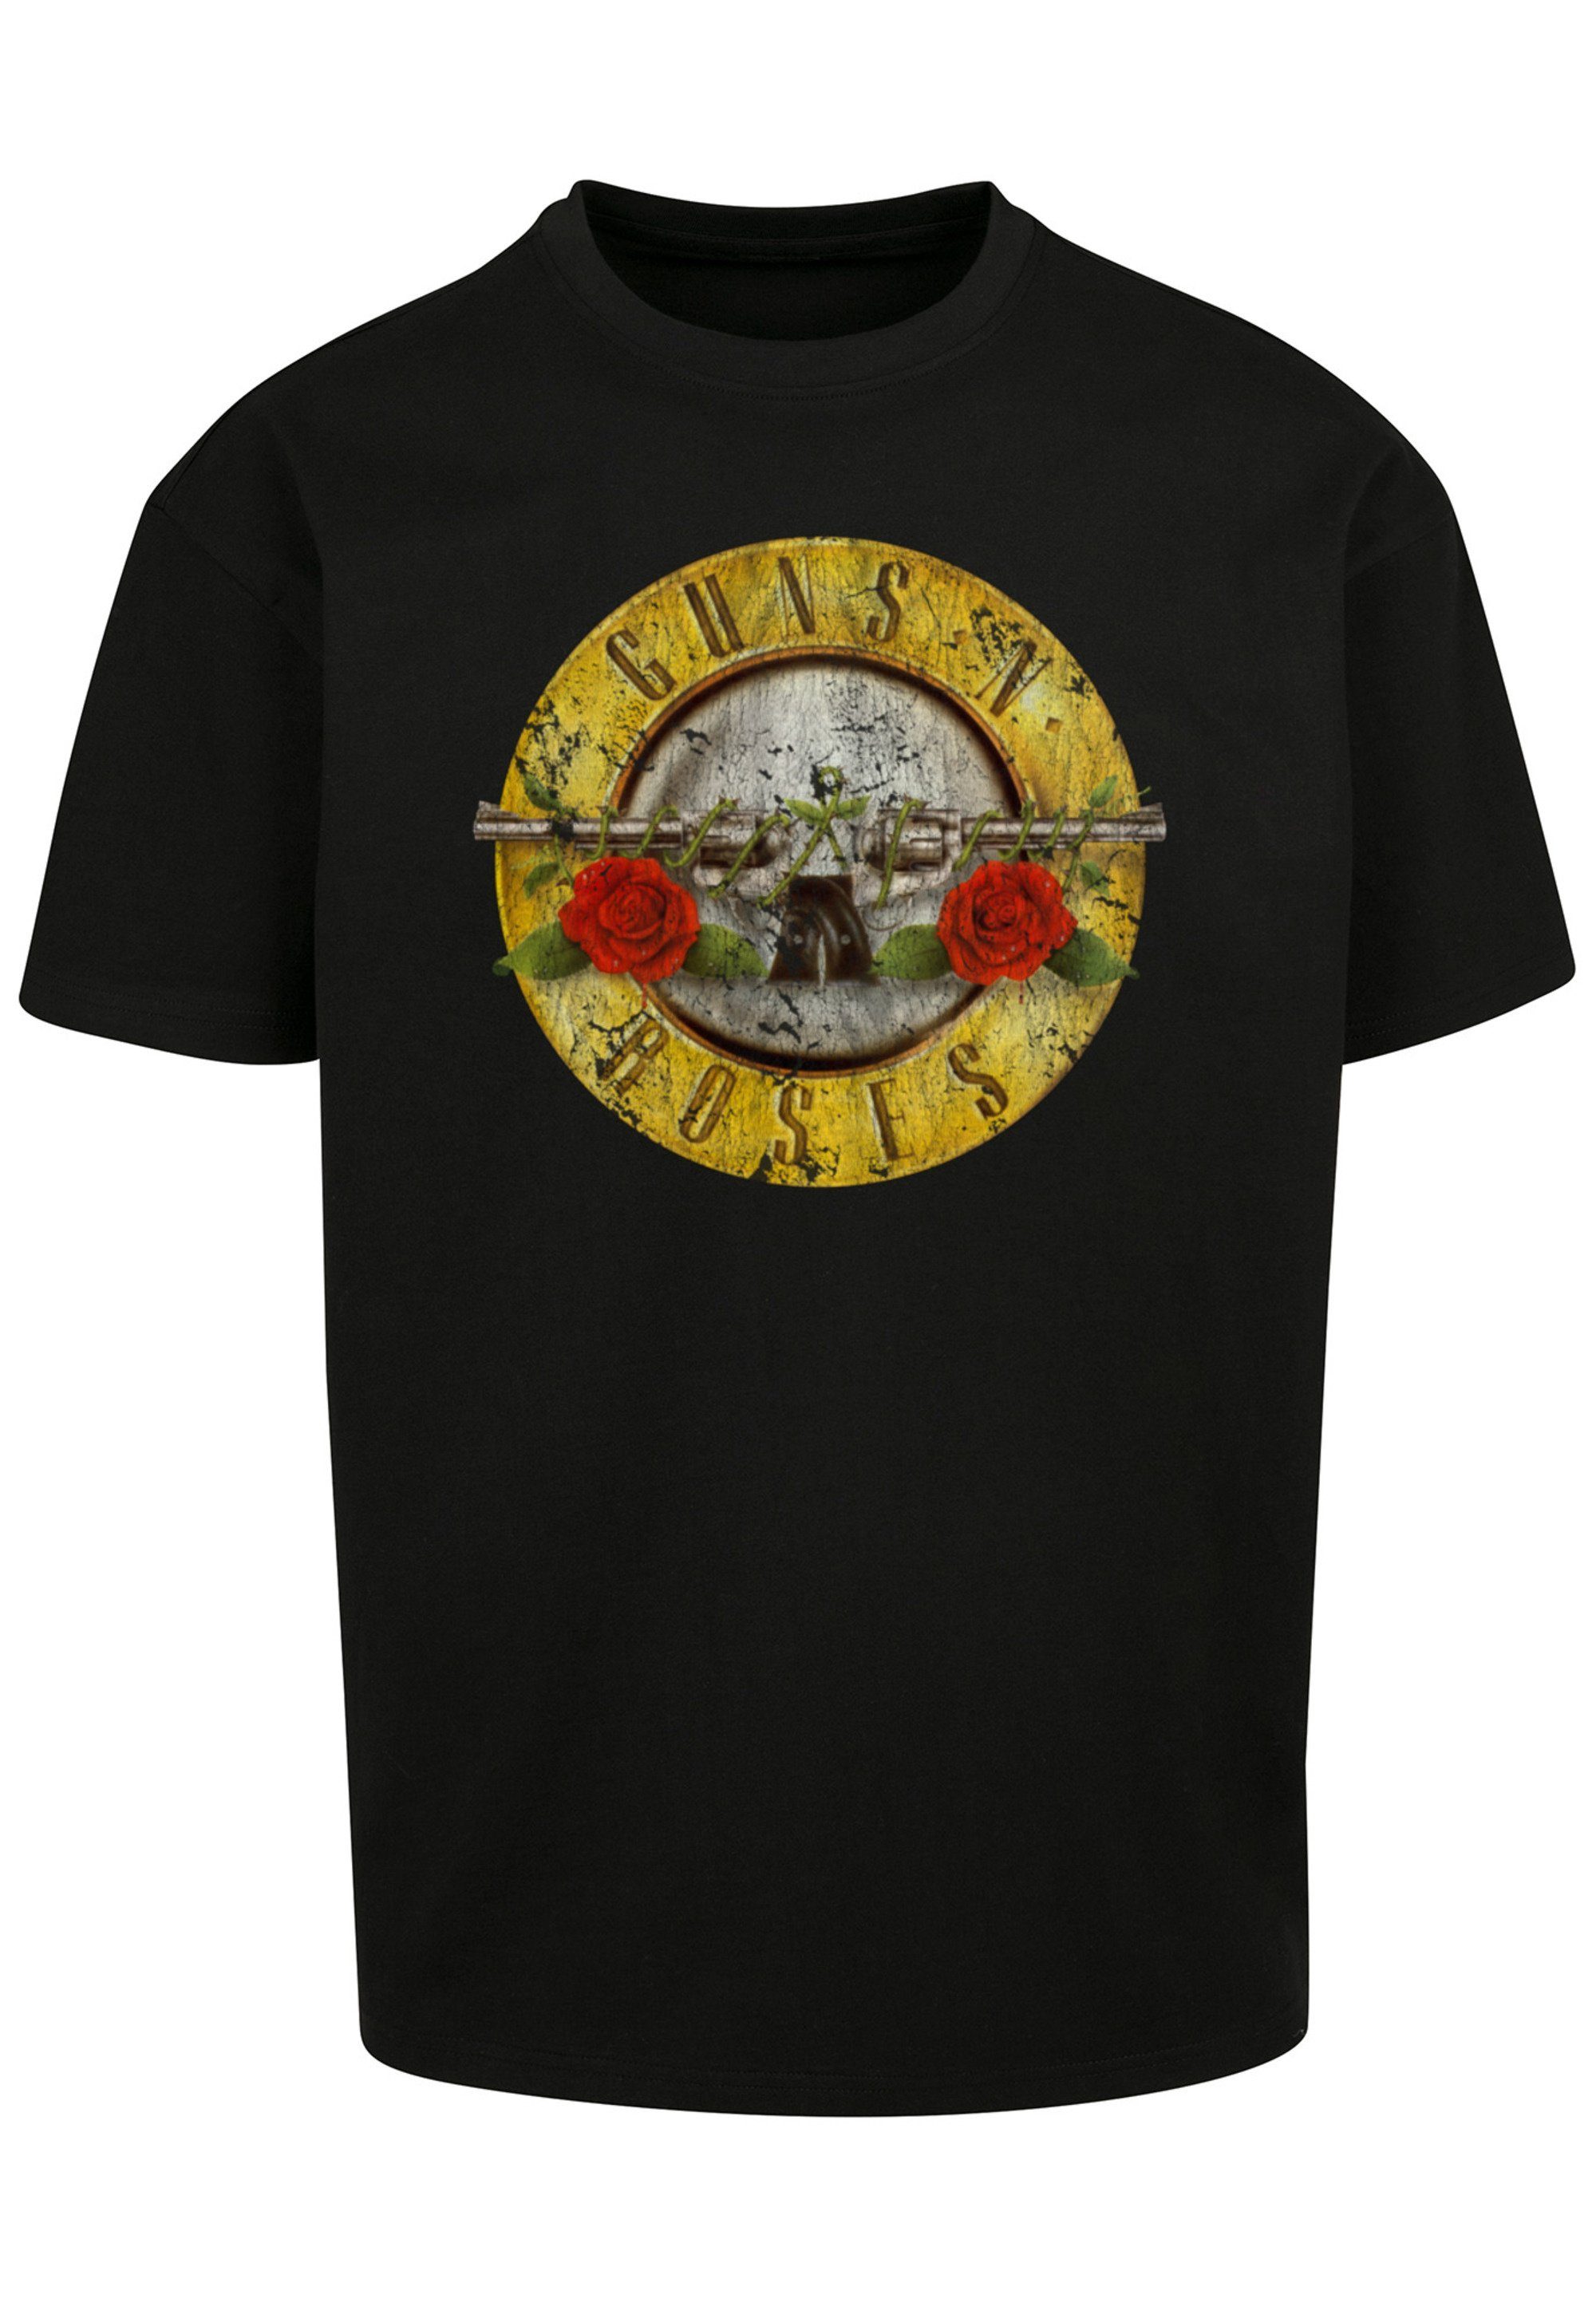 T-Shirt Print F4NT4STIC Roses Vintage Black Band (Distressed) Logo Guns schwarz Classic 'n'